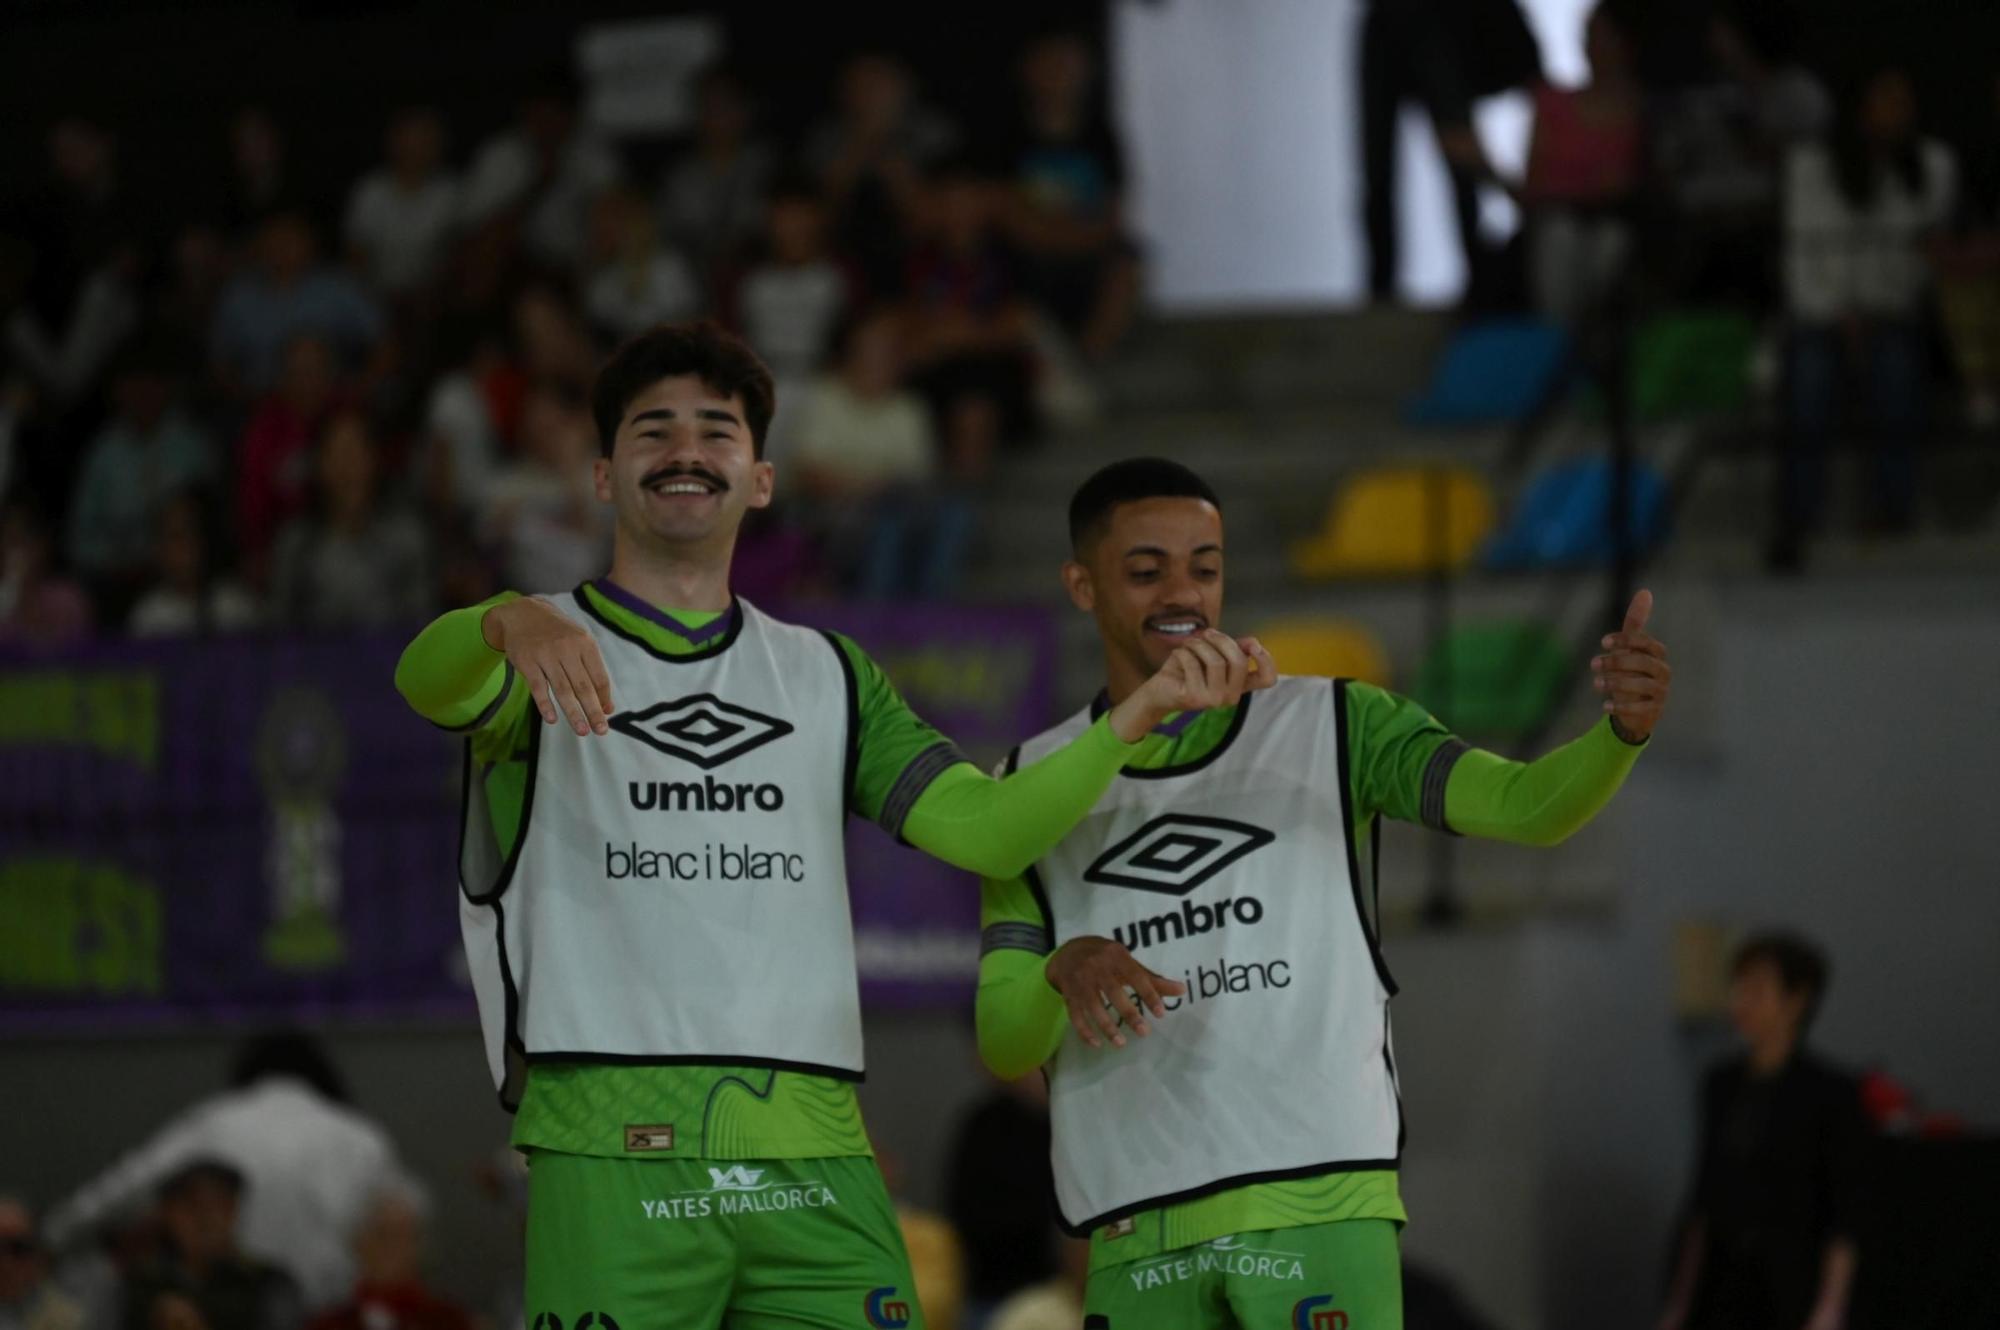 Las imágenes del Mallorca Palma Futsal on Tour by Blanc i Blanc’ en Sóller